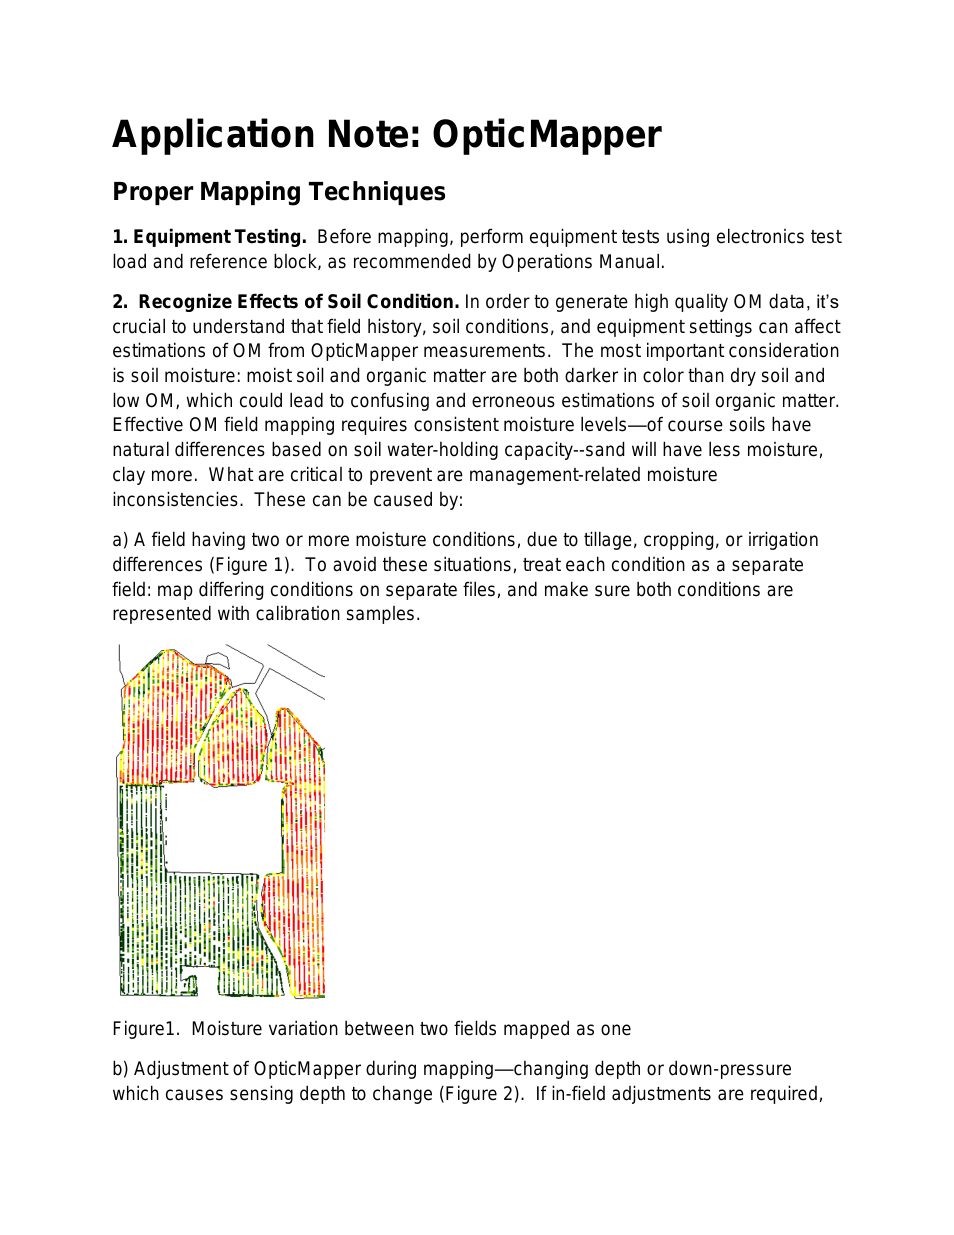 OpticMapper - Application Note